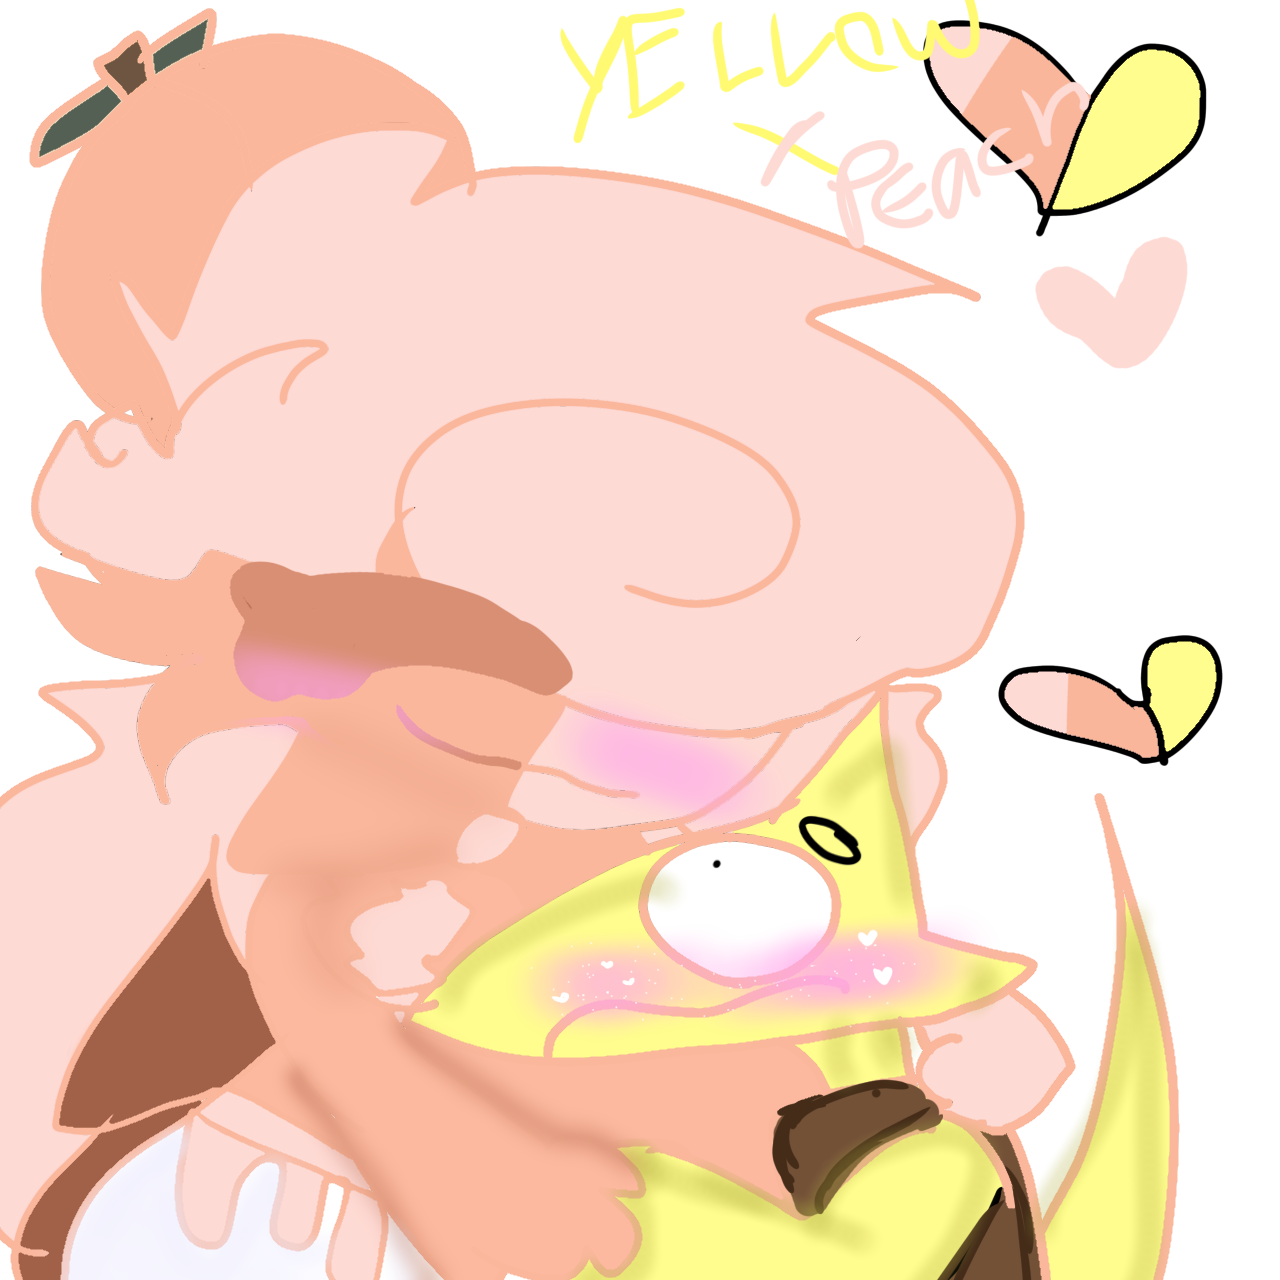 Peach x yellow rainbow friends by honeycottenLuna on DeviantArt